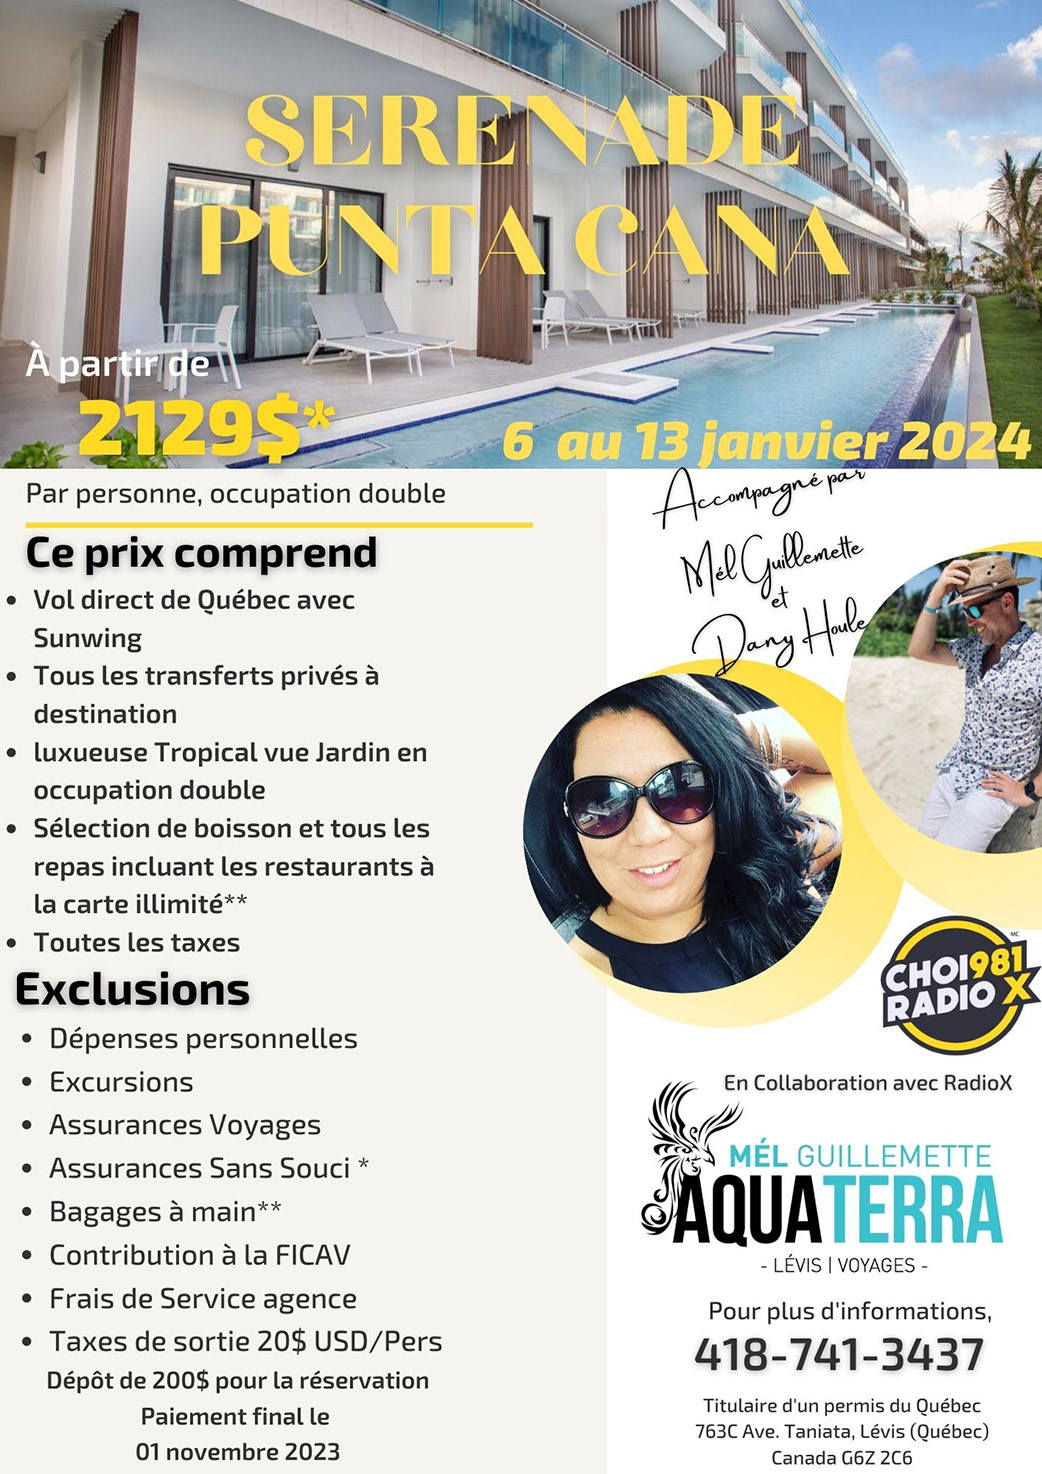 Voyage au Serenade Punta Cana Resort du 6 au 13 janvier 2024